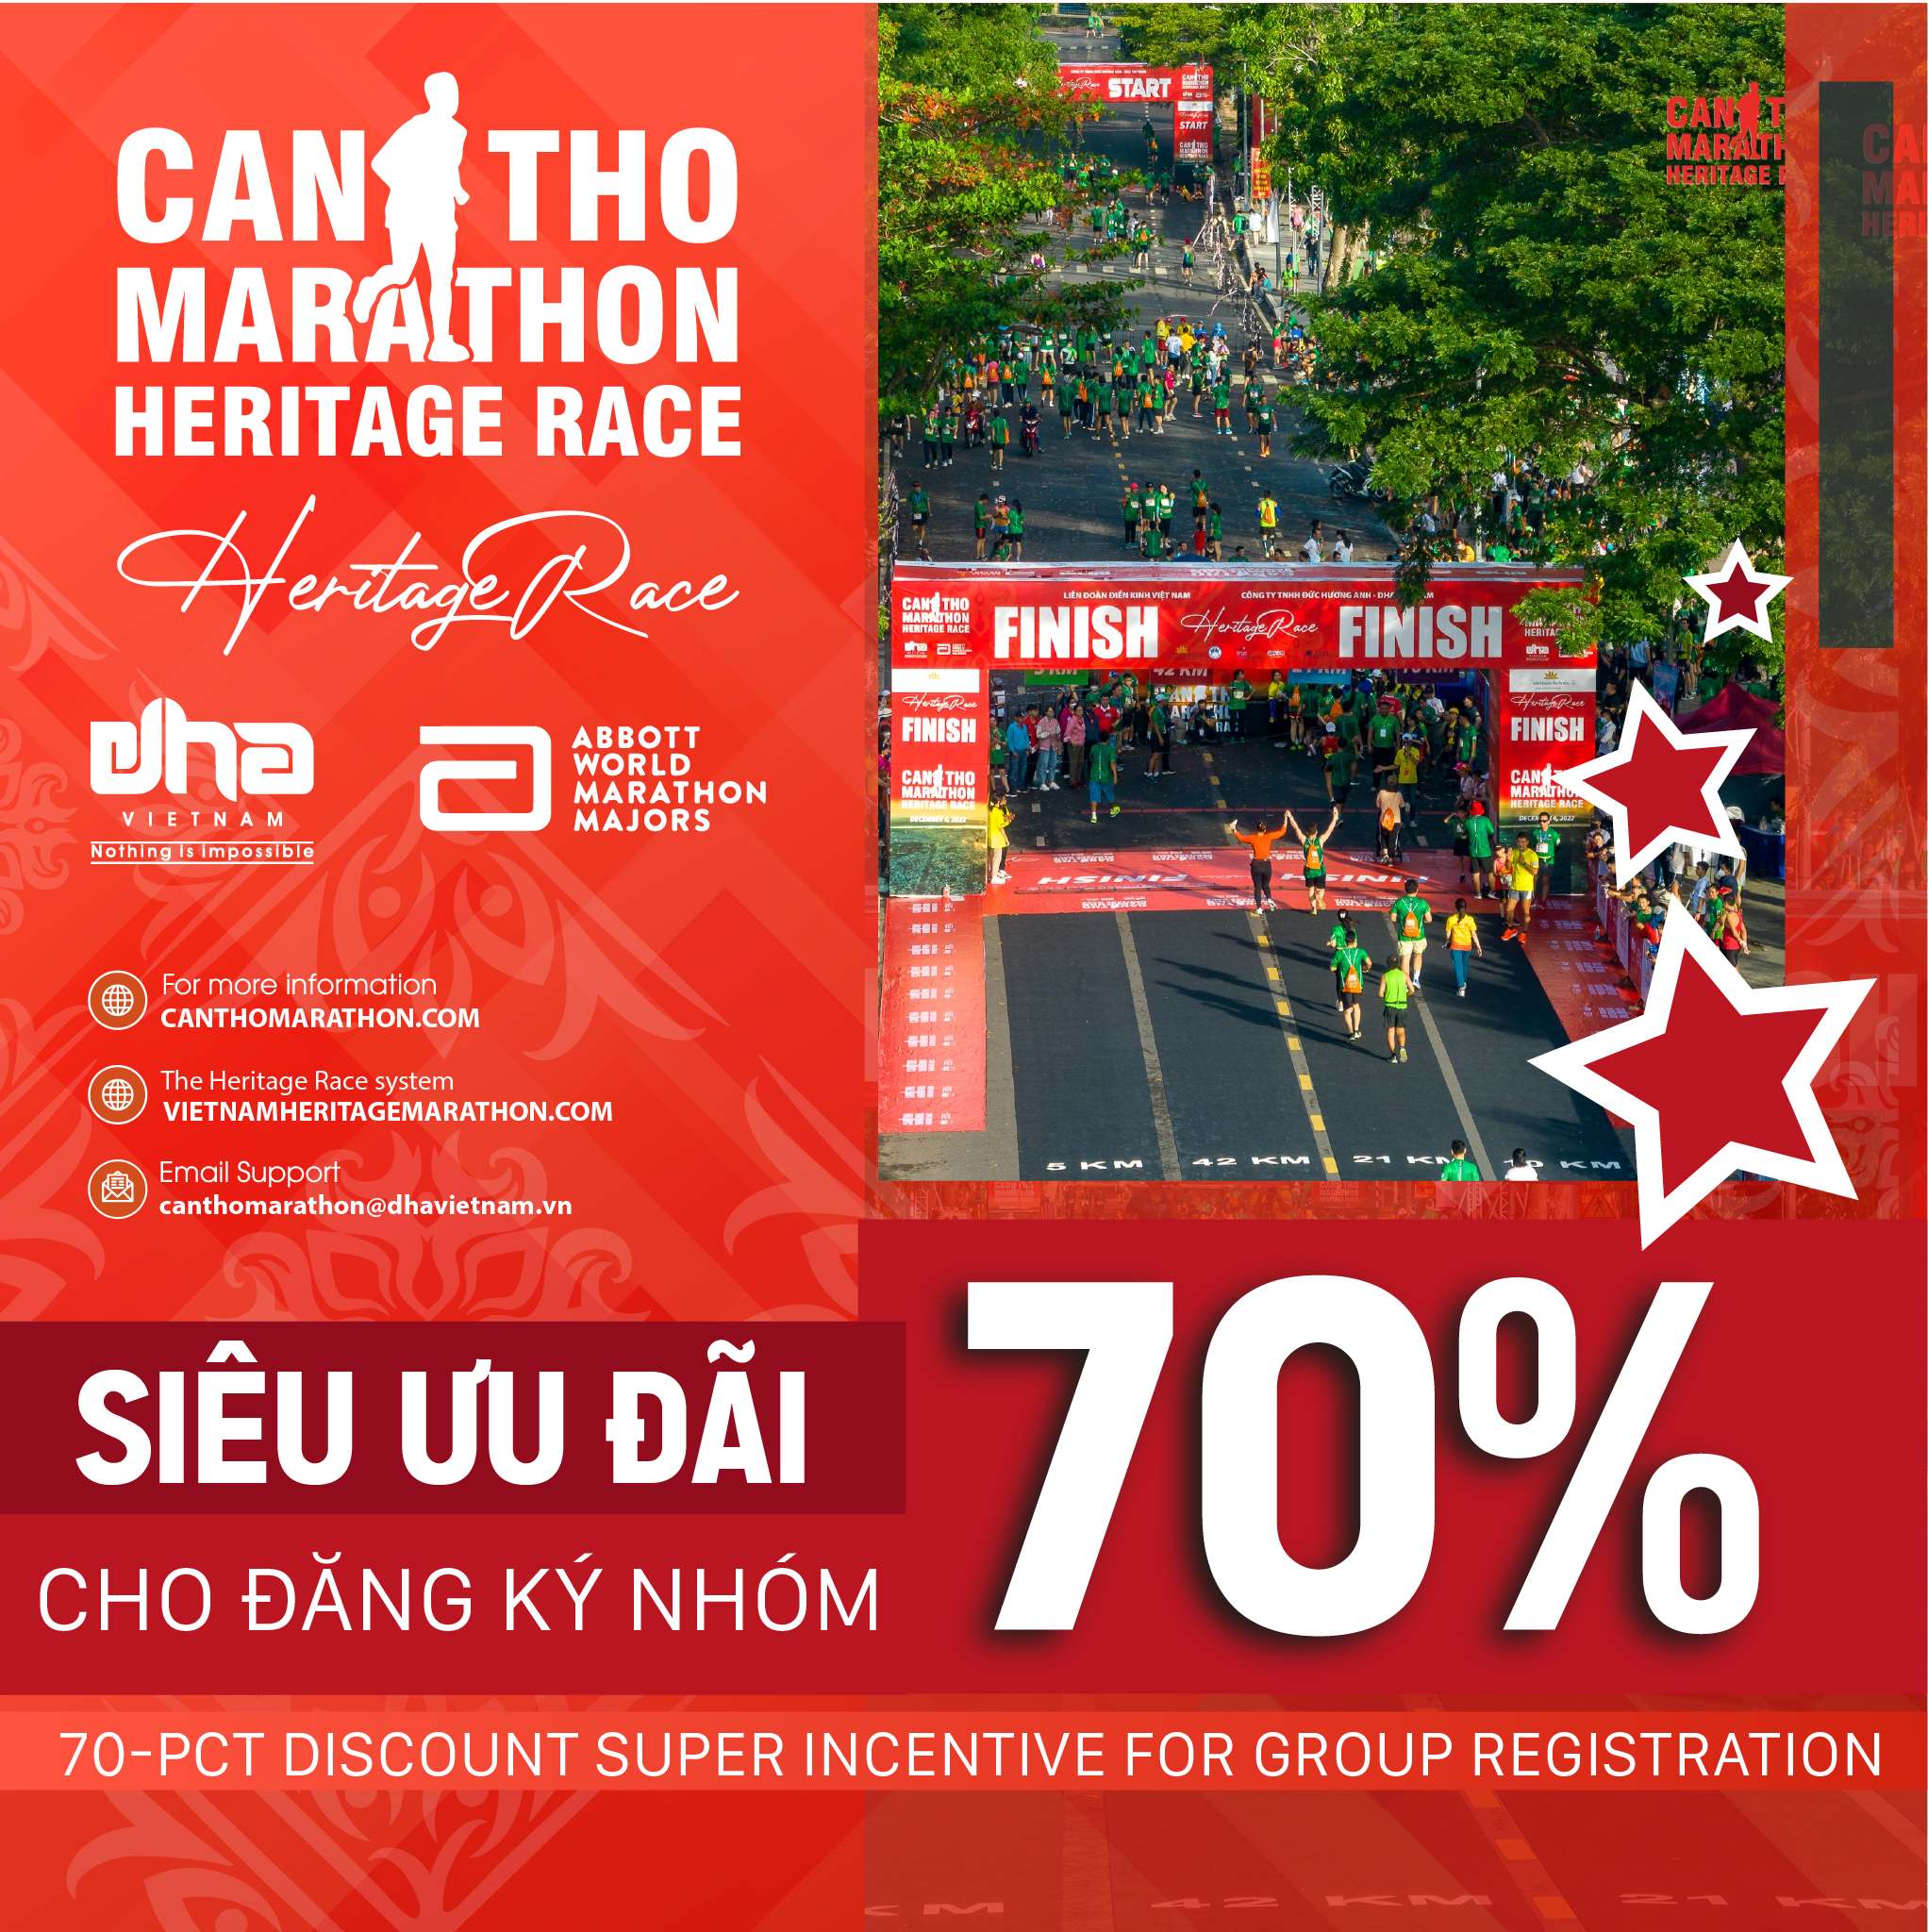 Can Tho Marathon-A Heritage Race: 70-Pct Discount Super Incentive